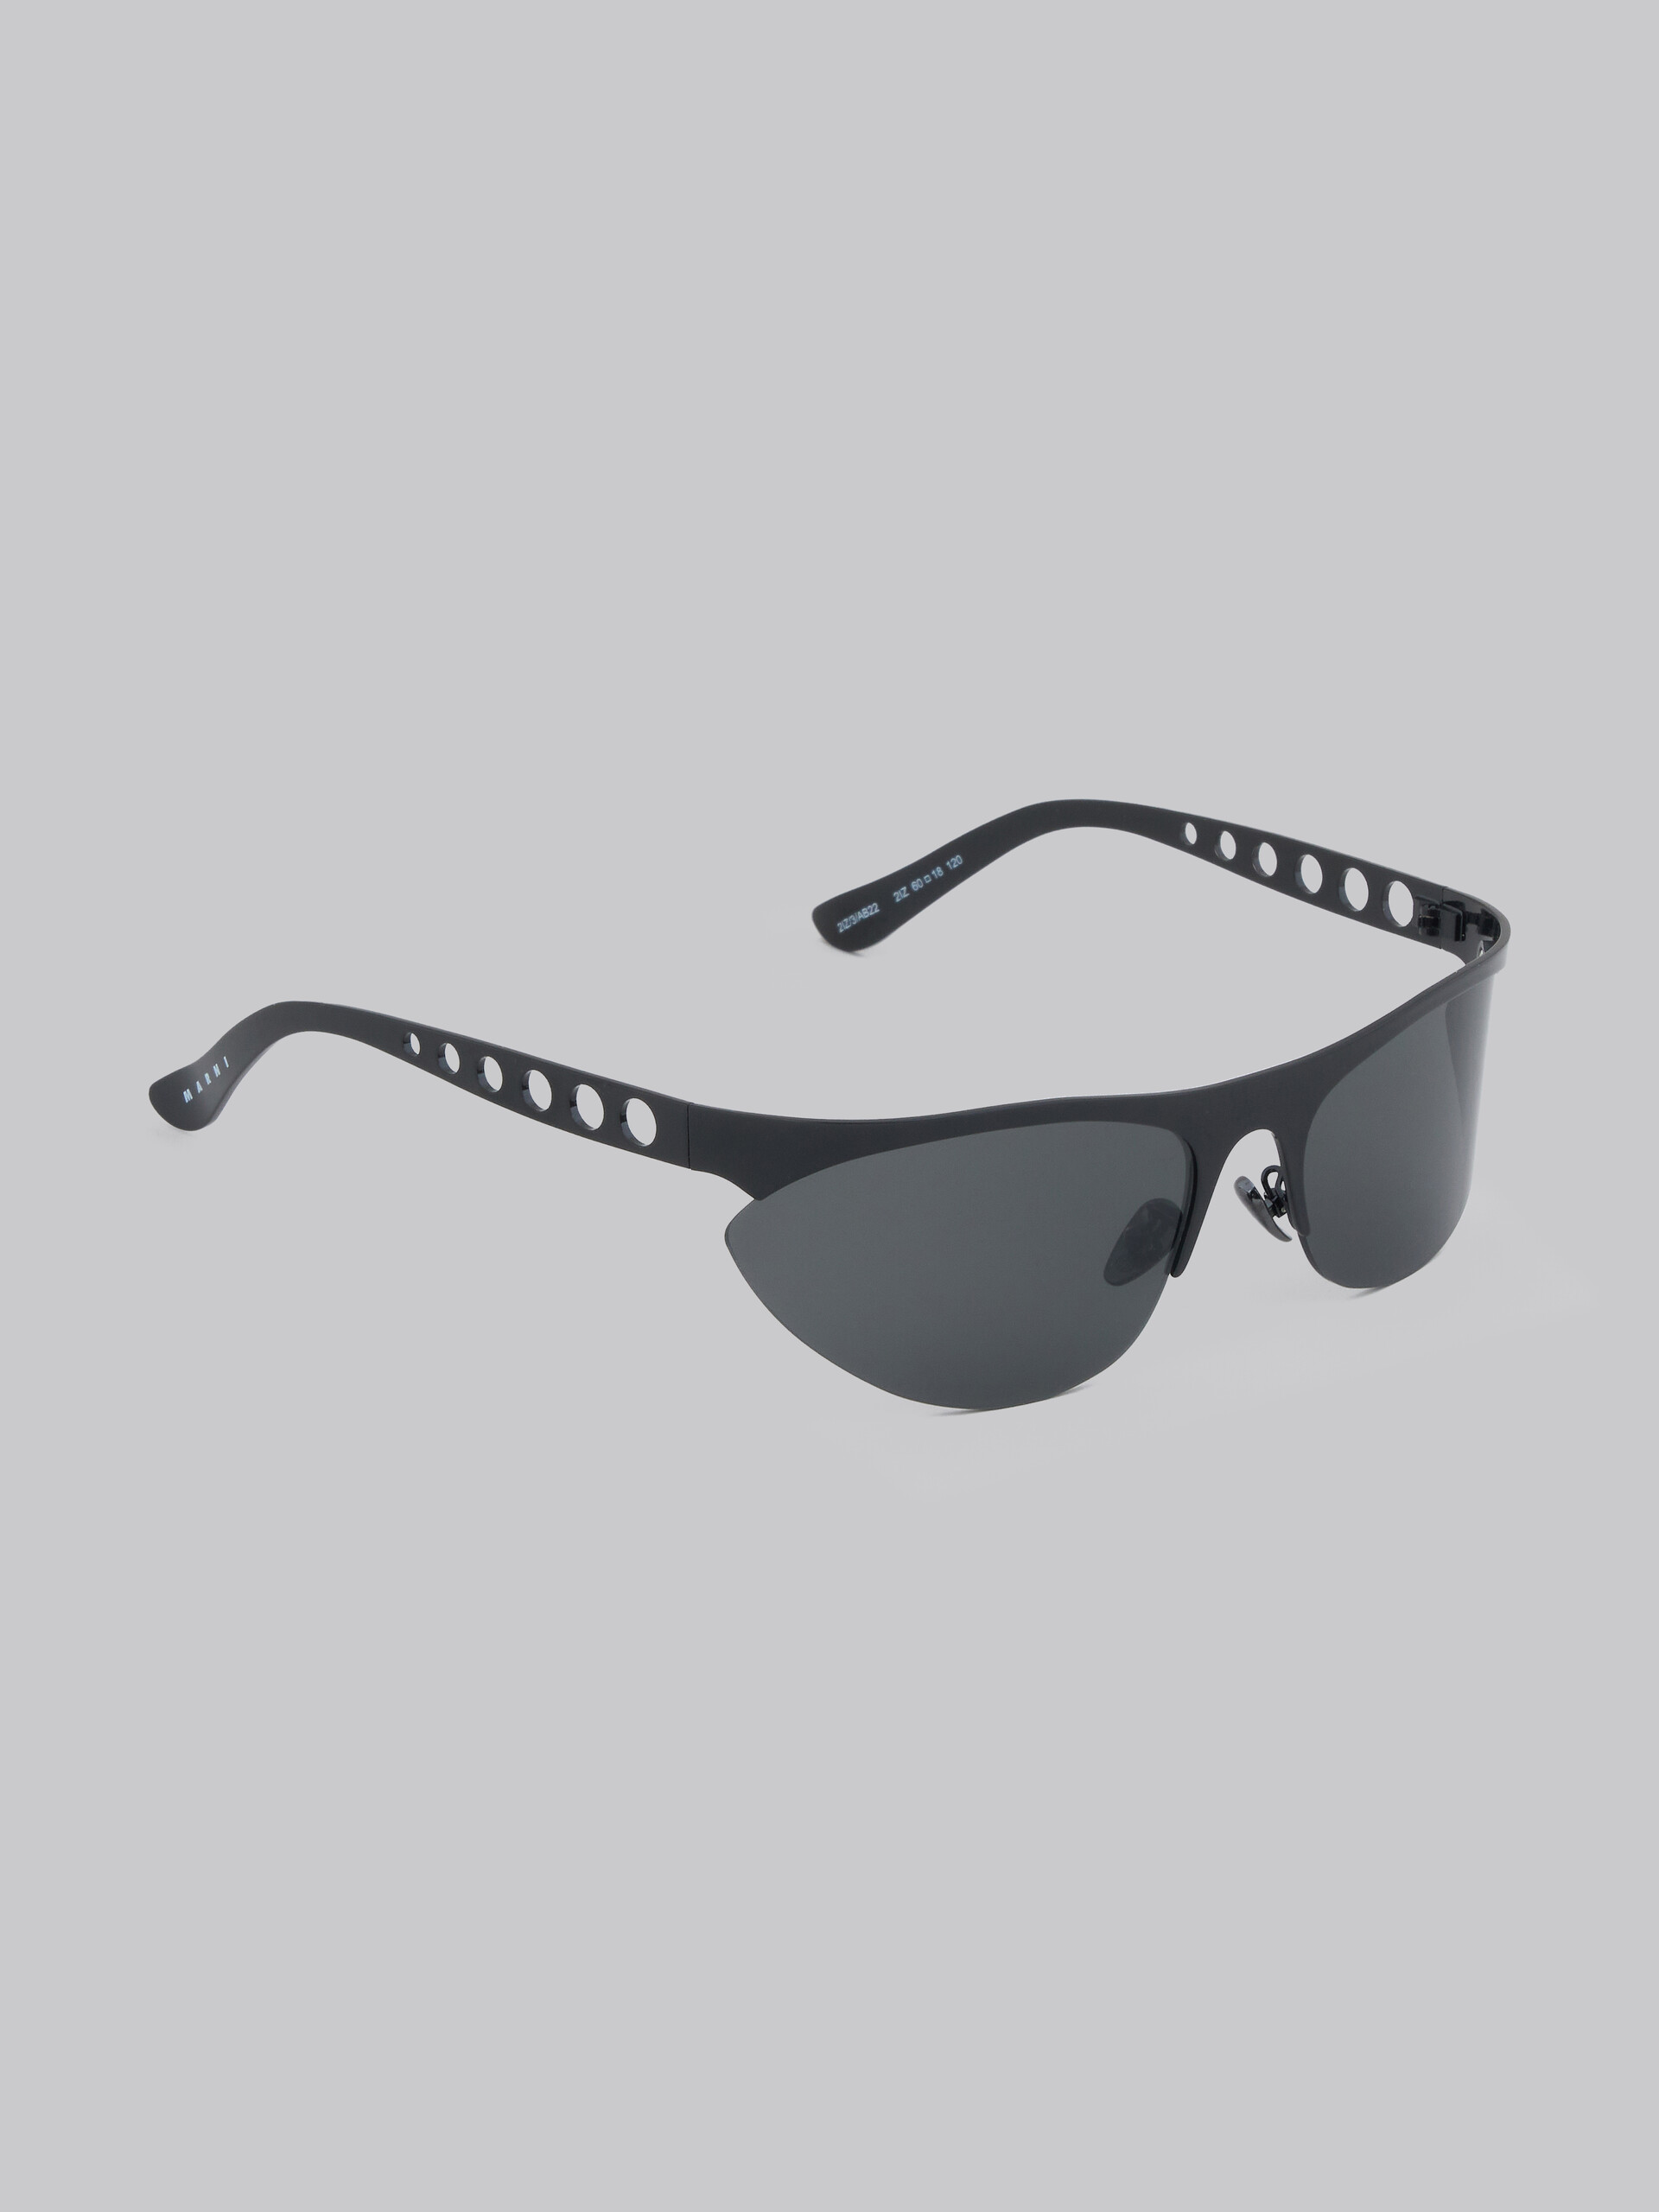 Black Salar De Uyuni metal sunglasses - Optical - Image 3